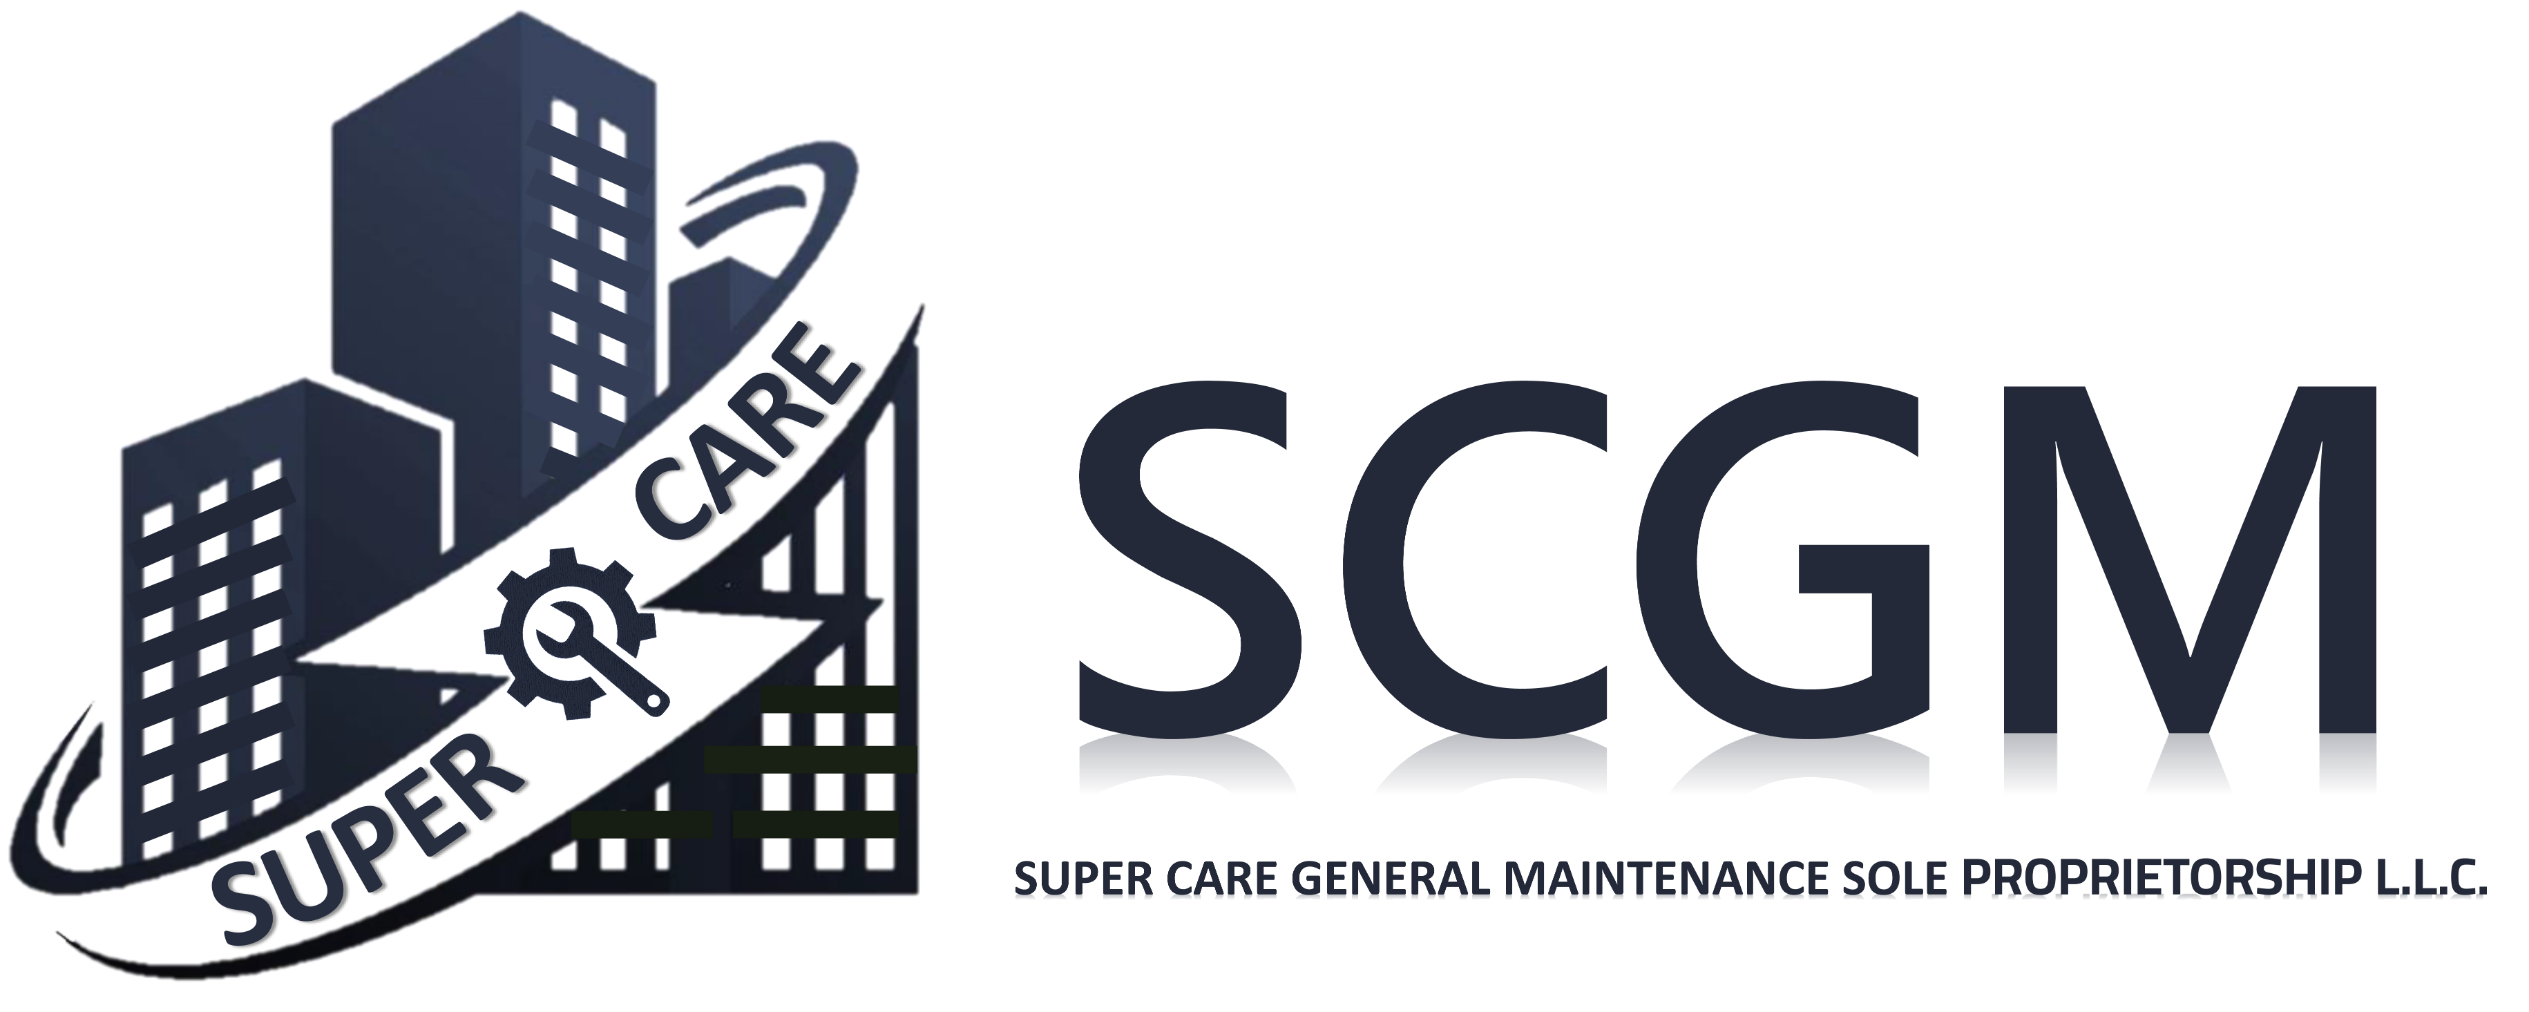 Scgm logo